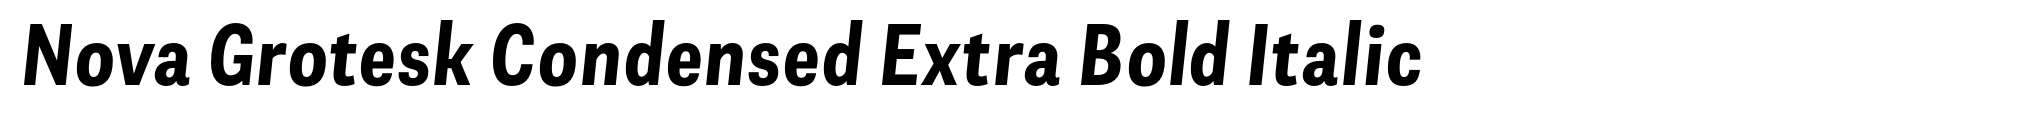 Nova Grotesk Condensed Extra Bold Italic image